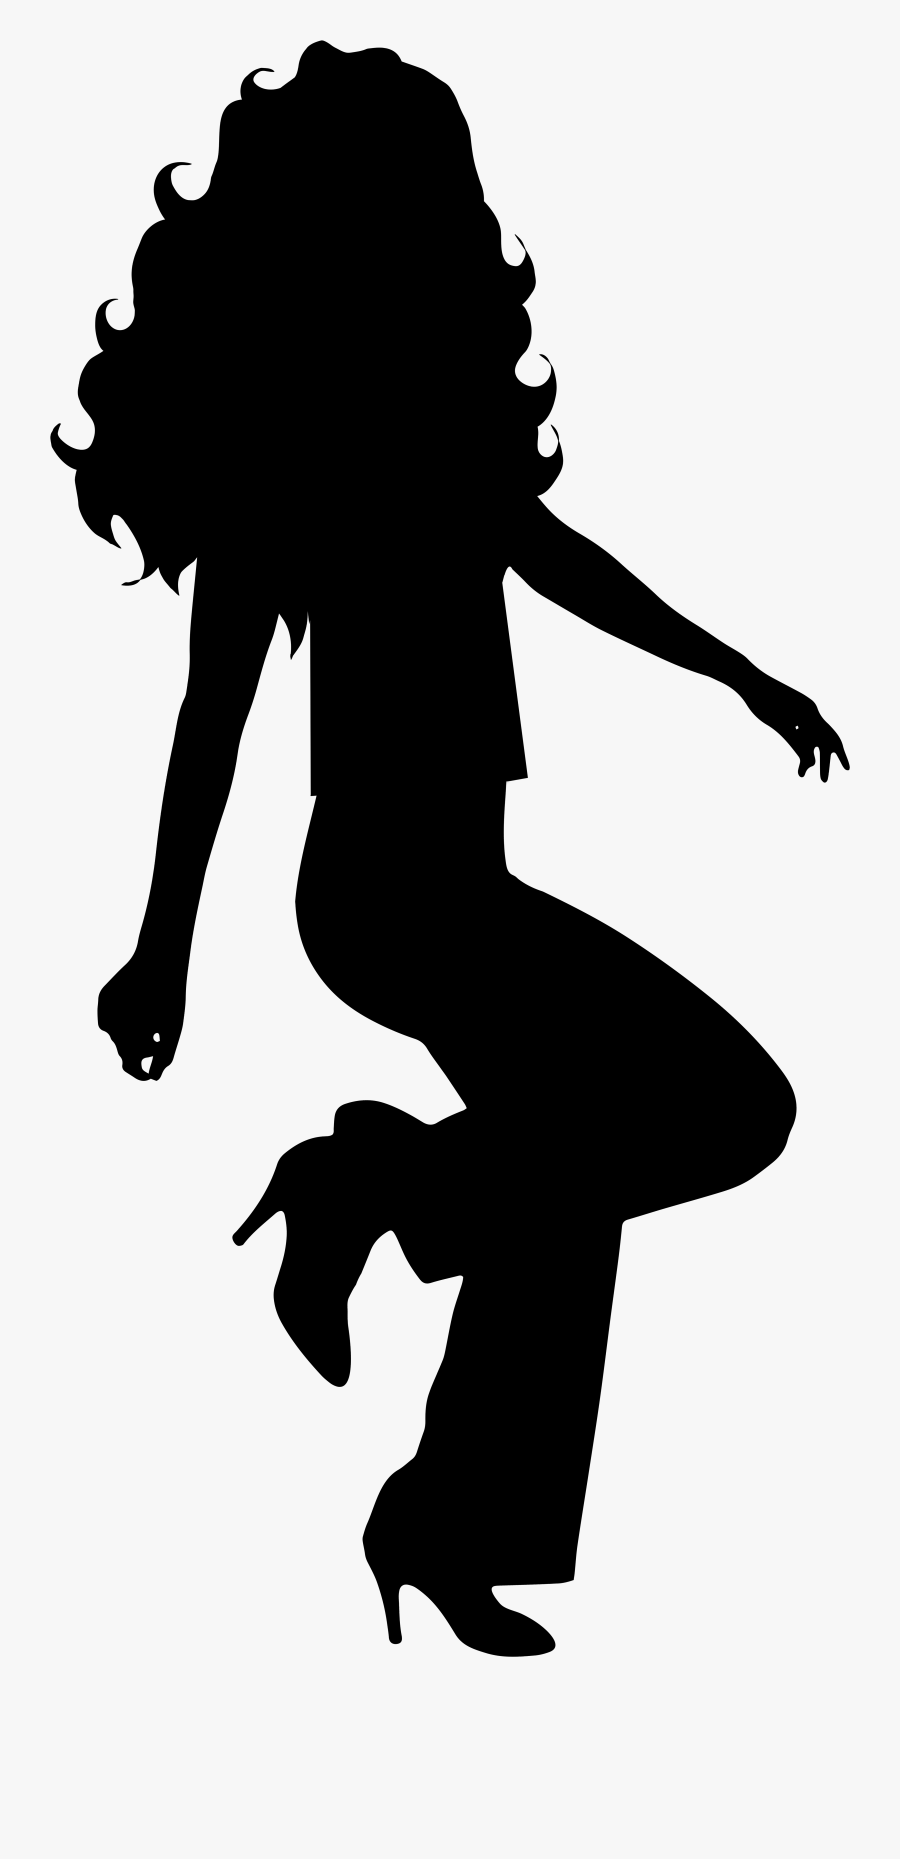 Dancing Girl Silhouette Clip Art Imageu200b Gallery - Dancing Girl Silhouette Clip Art, Transparent Clipart